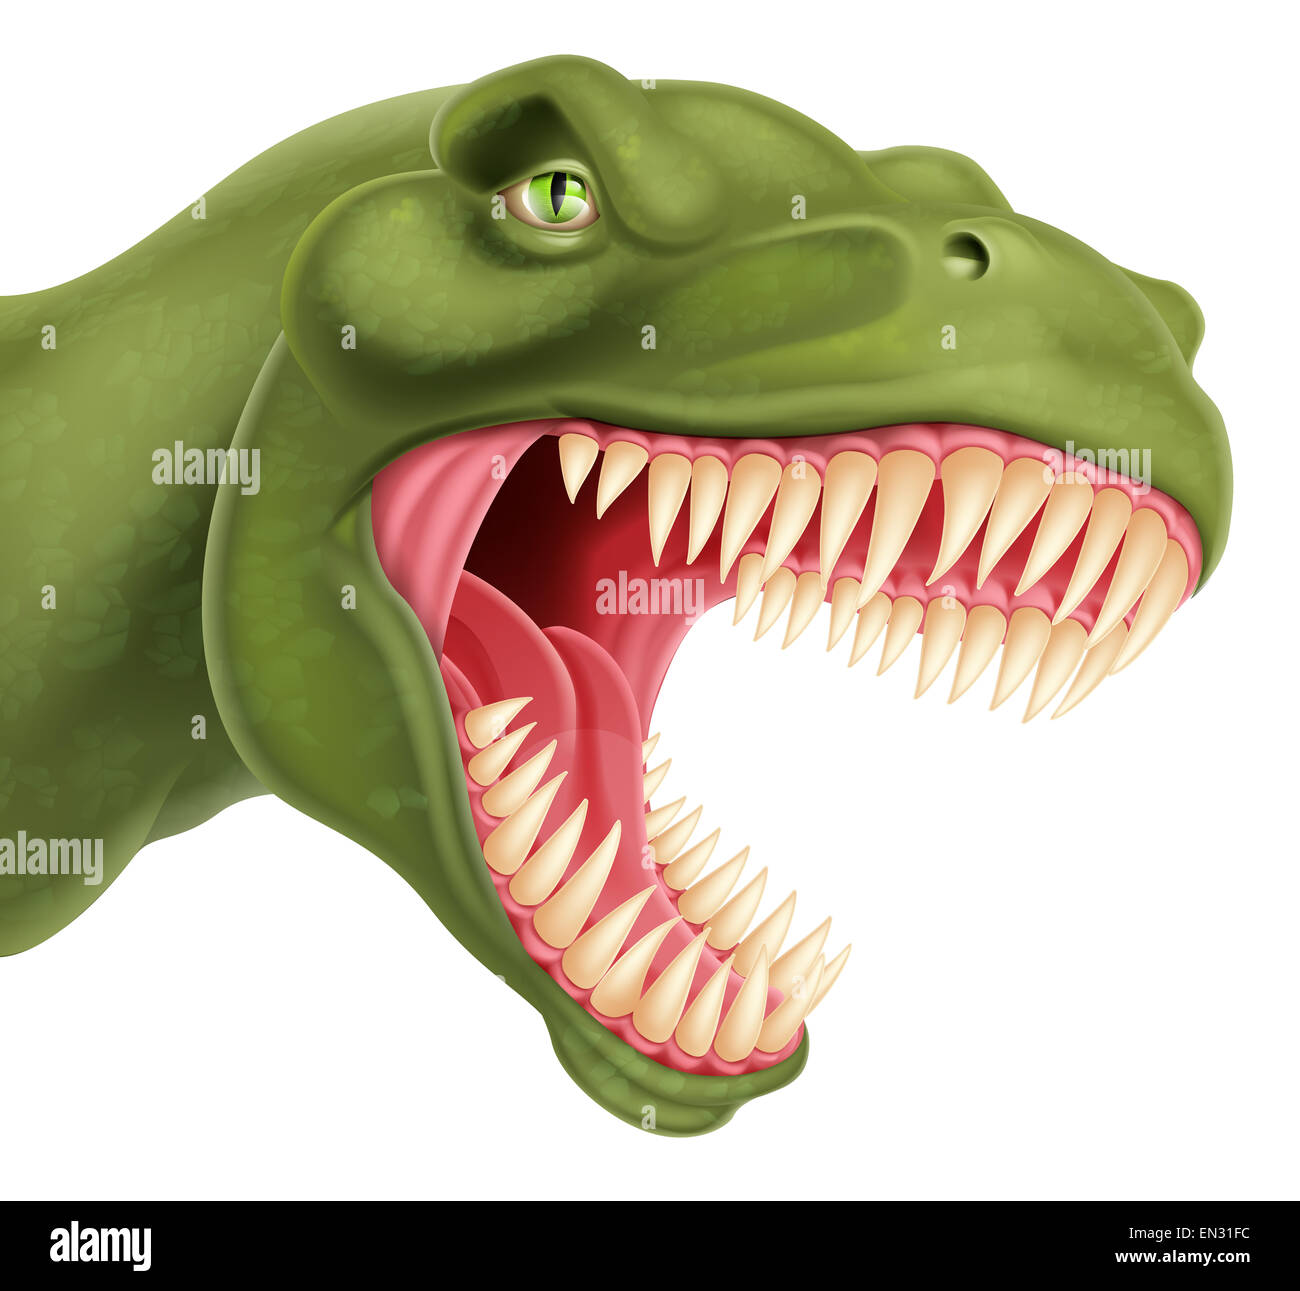 An illustration of a detailed T Rex tyrannosaurus rex dinosaur head Stock Photo